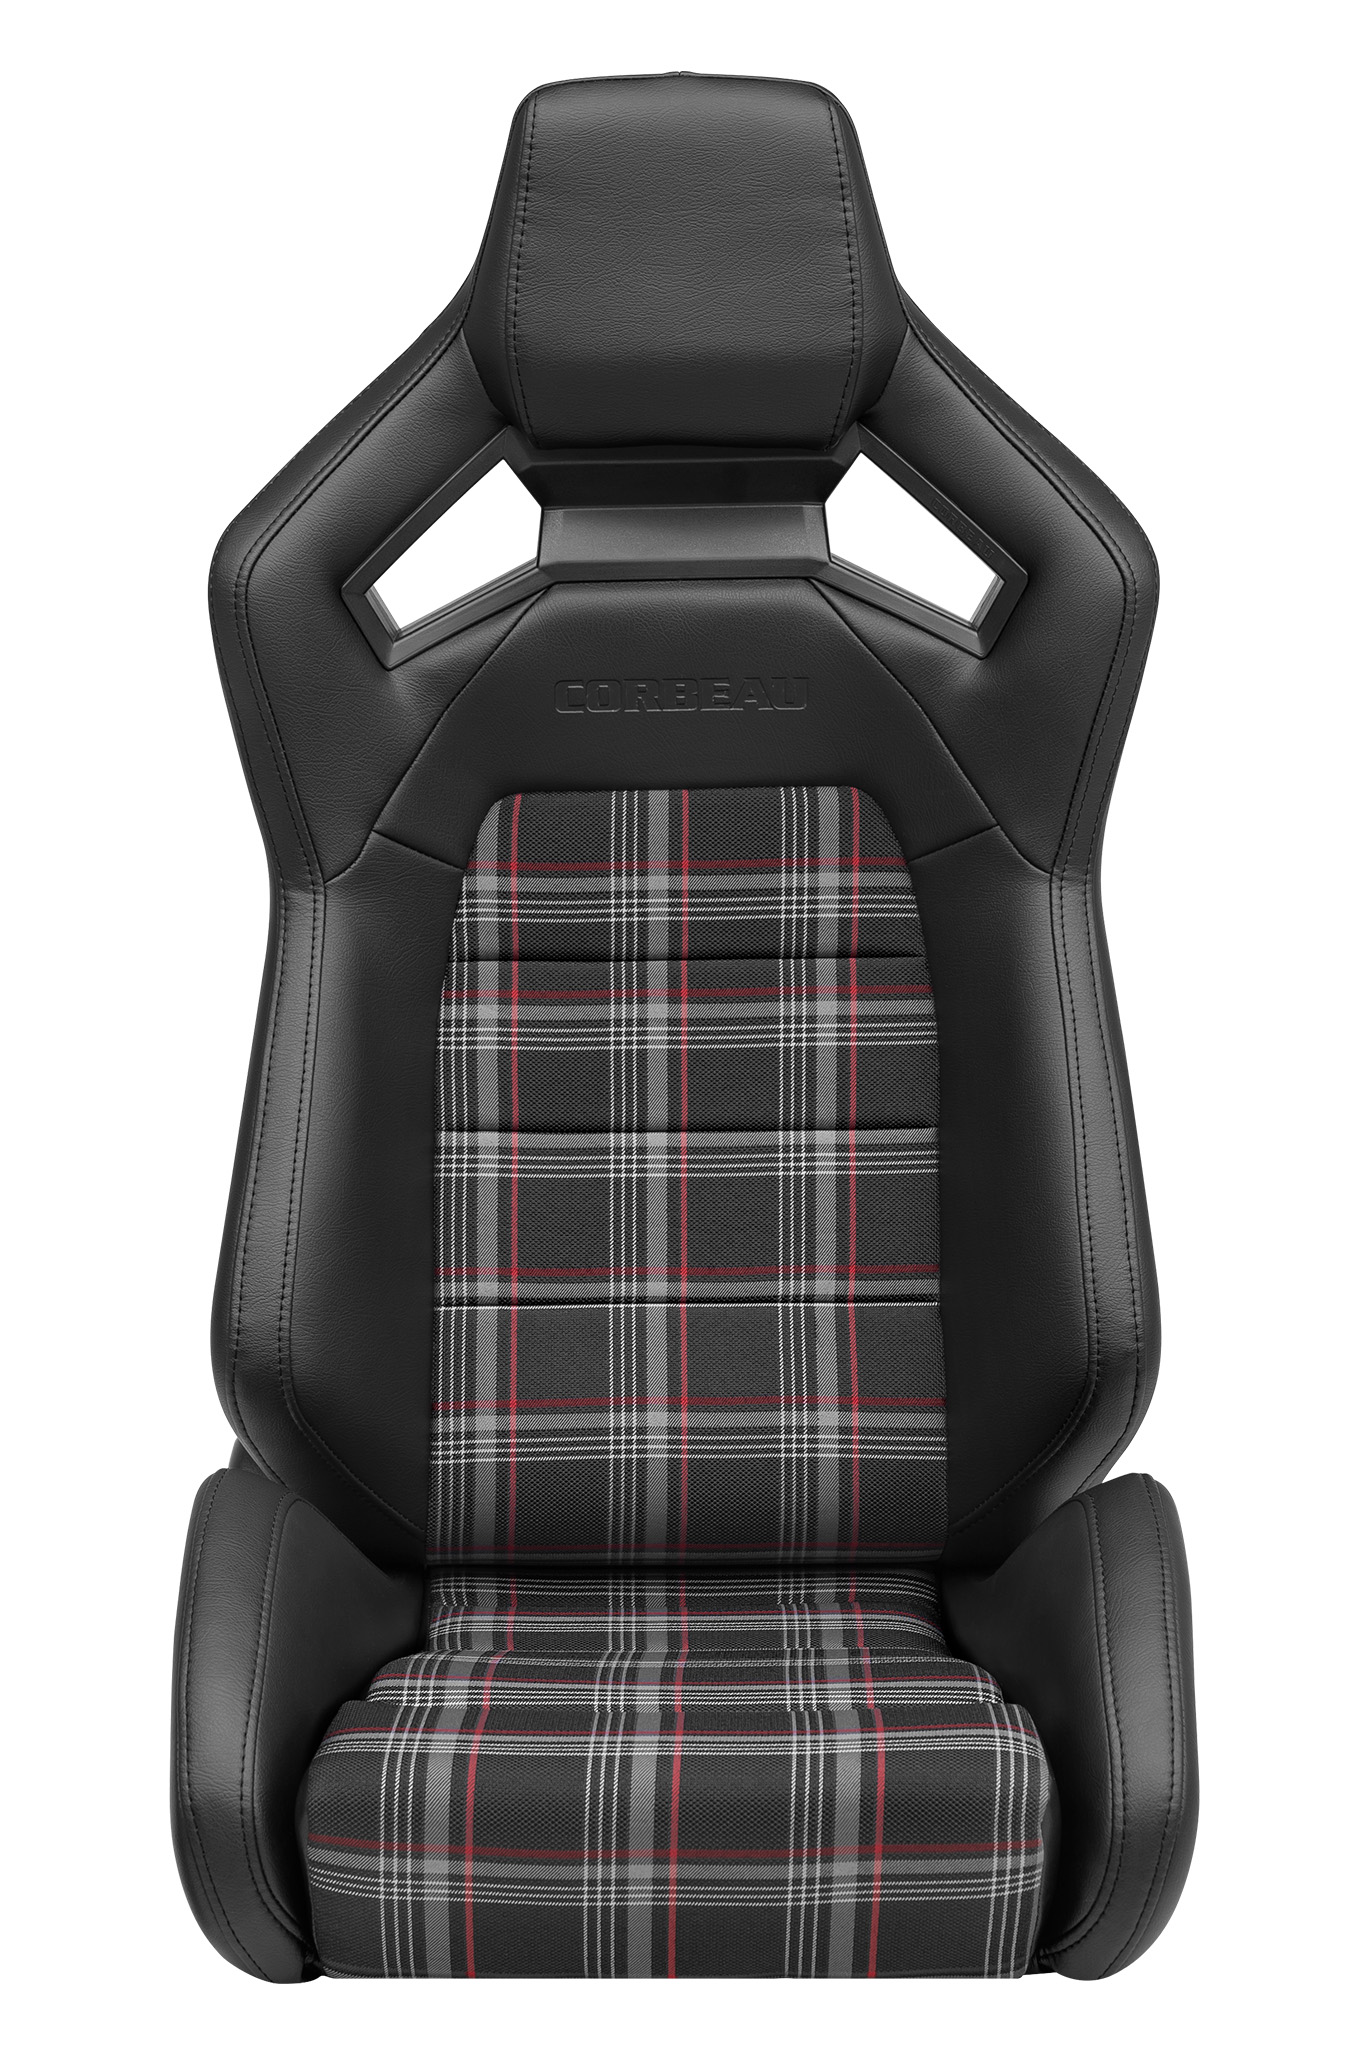 Corbeau Sportline  Racing Seat, RRX Black Vinyl, Red Plaid Cloth, 55022PR, PAIR